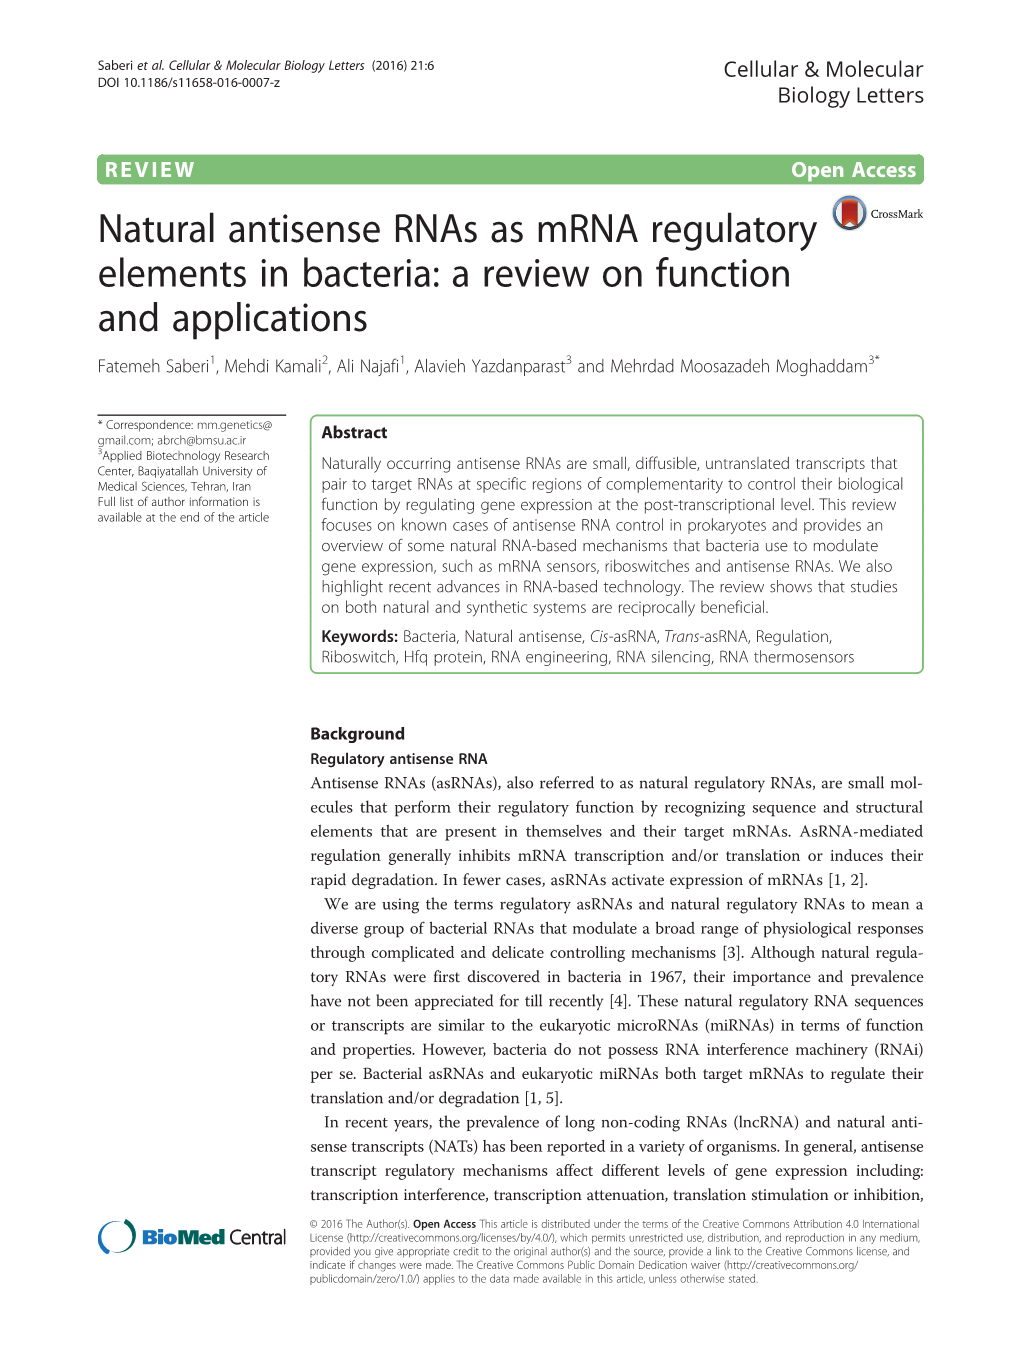 Natural Antisense Rnas As Mrna Regulatory Elements in Bacteria